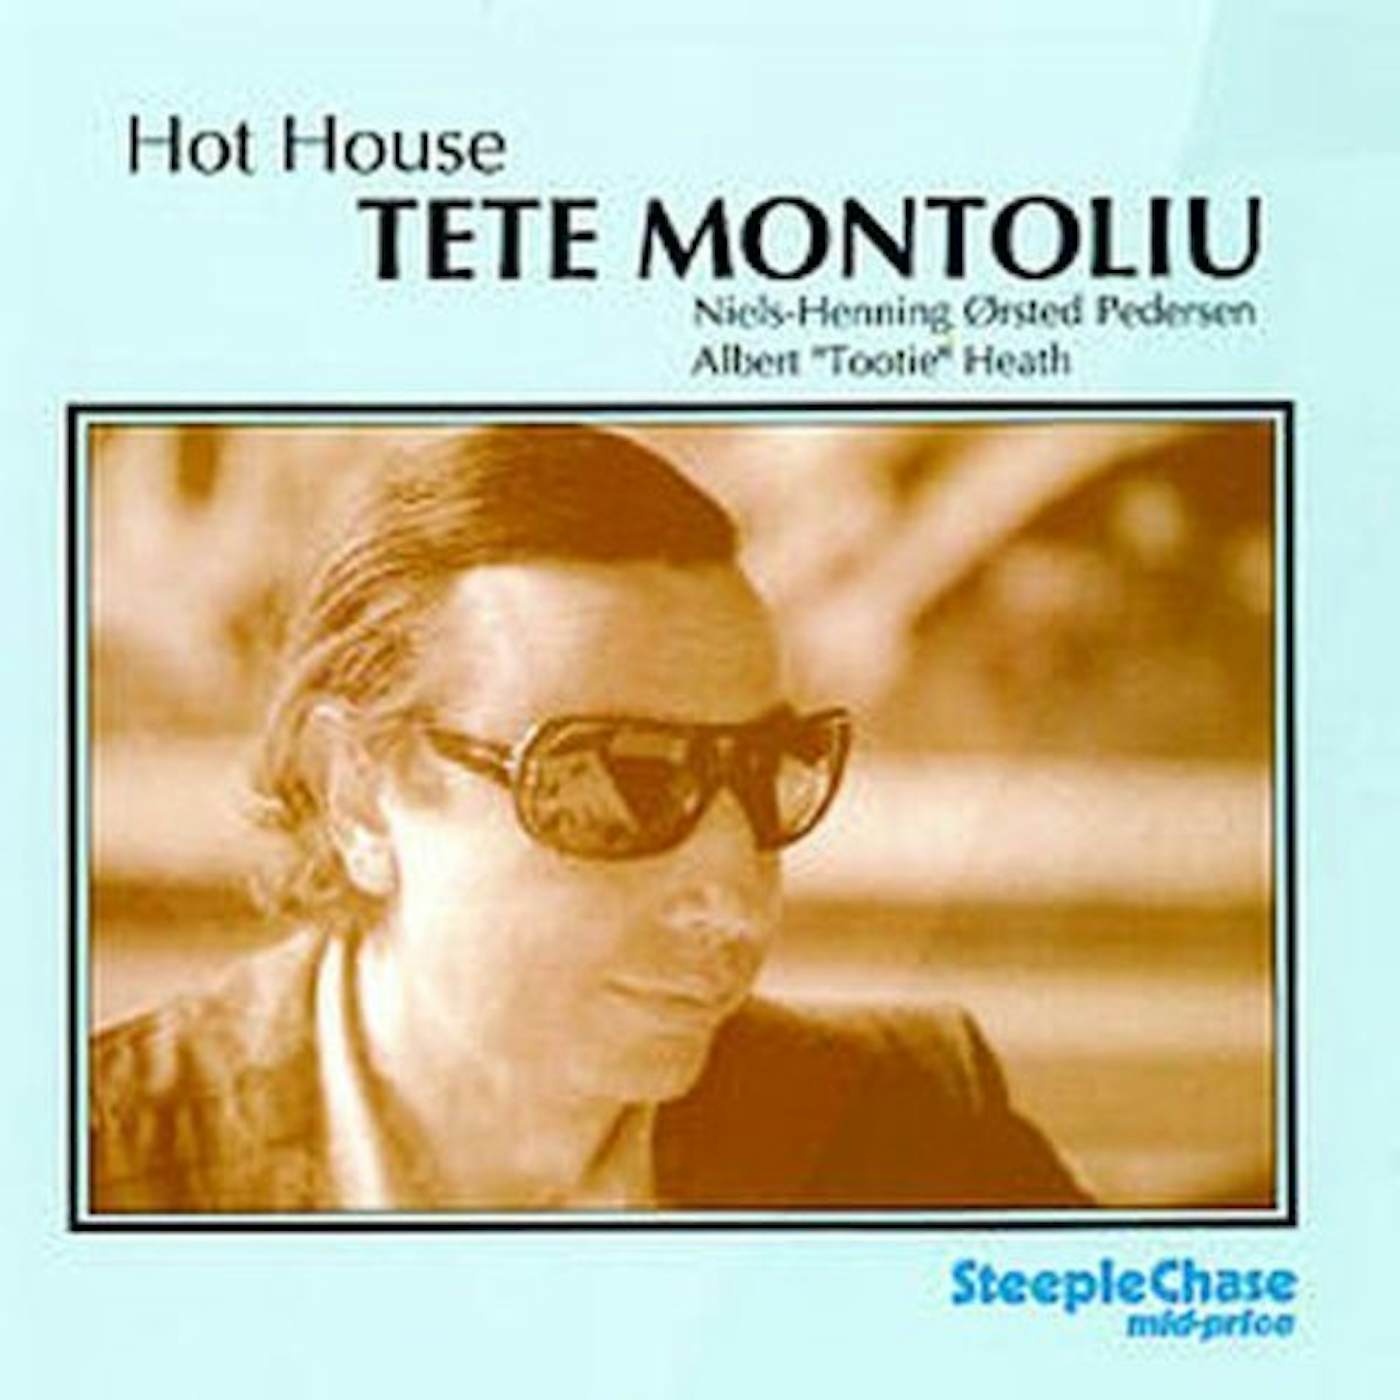 Tete Montoliu HOT HOUSE CD